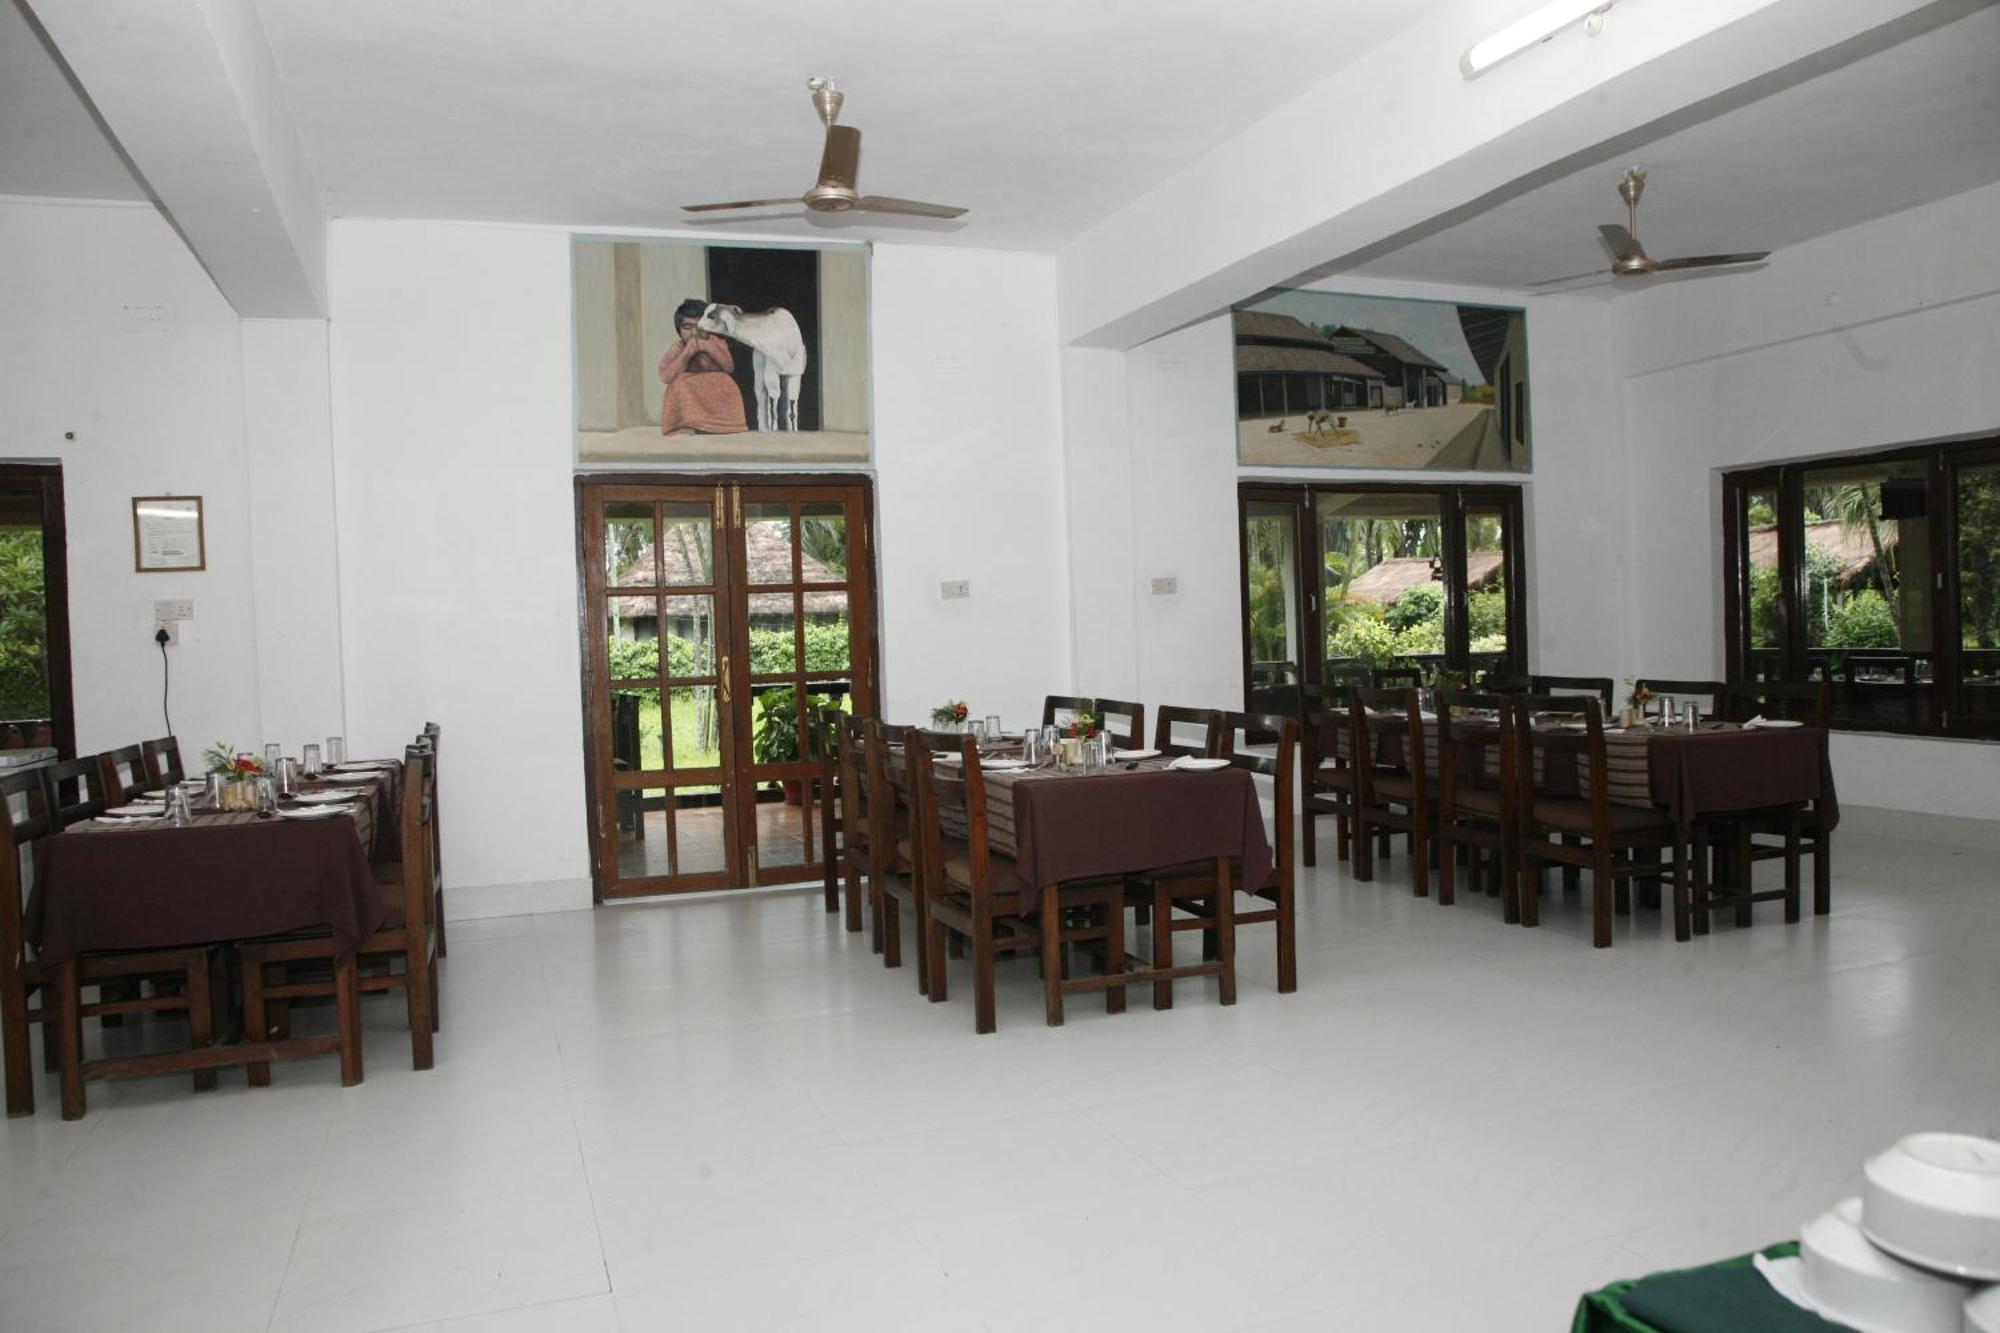 Chitwan Paradise Hotel Sauraha Exterior photo